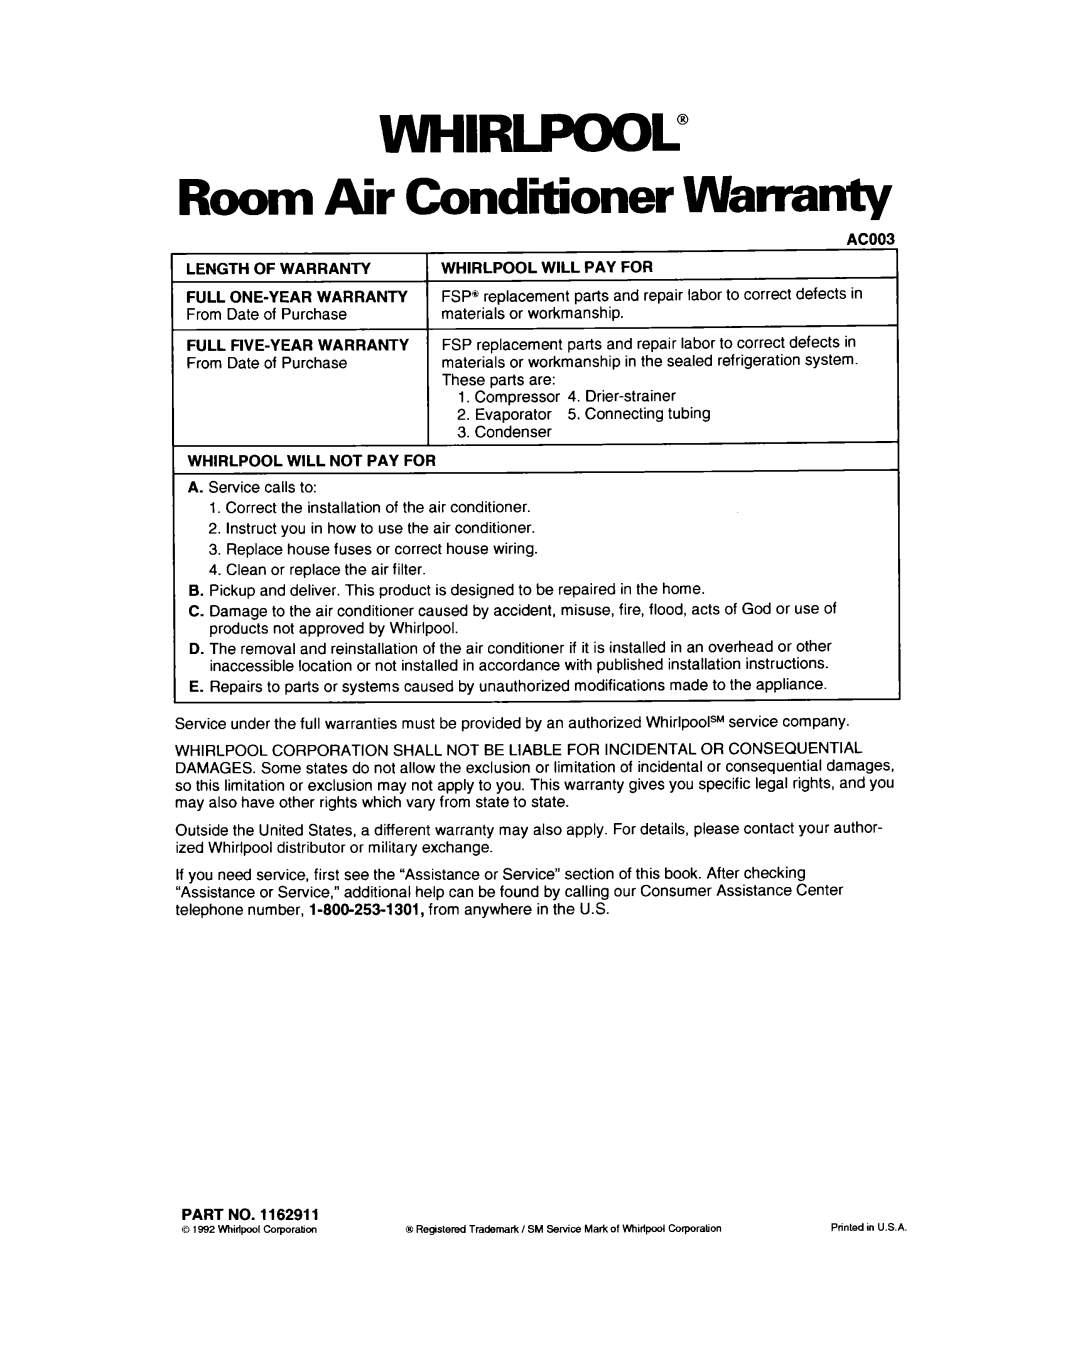 Whirlpool ACQ062, AC0052 warranty Whirlpool@, Wammty, Room, Conditioner 